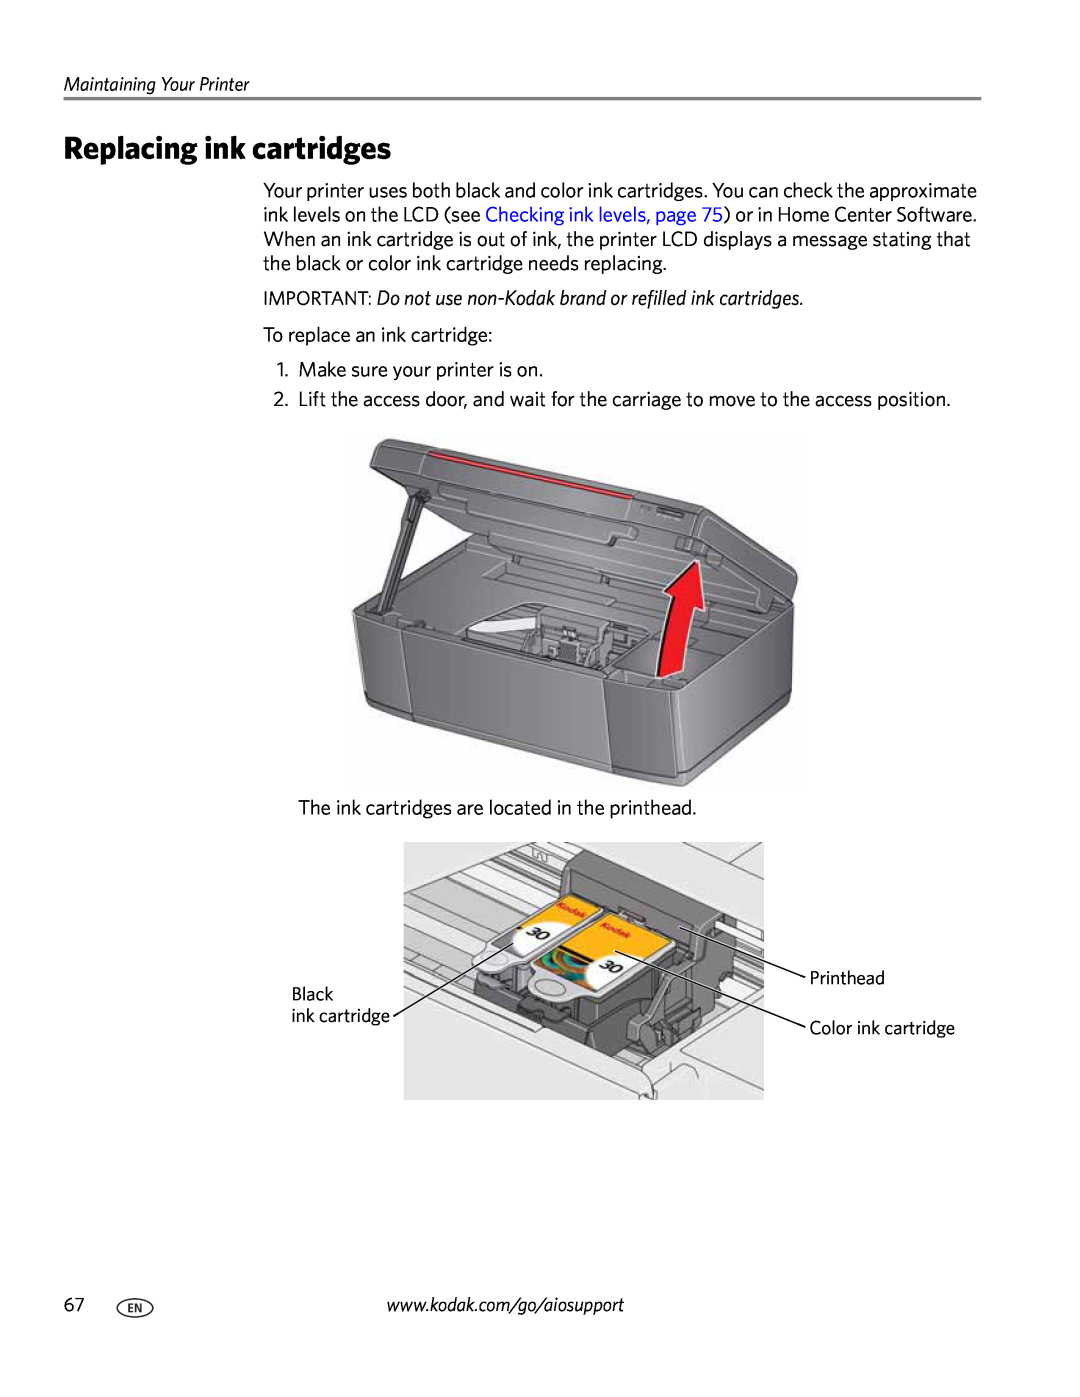 Kodak 3.1 manual Replacing ink cartridges, IMPORTANT Do not use non-Kodak brand or refilled ink cartridges 